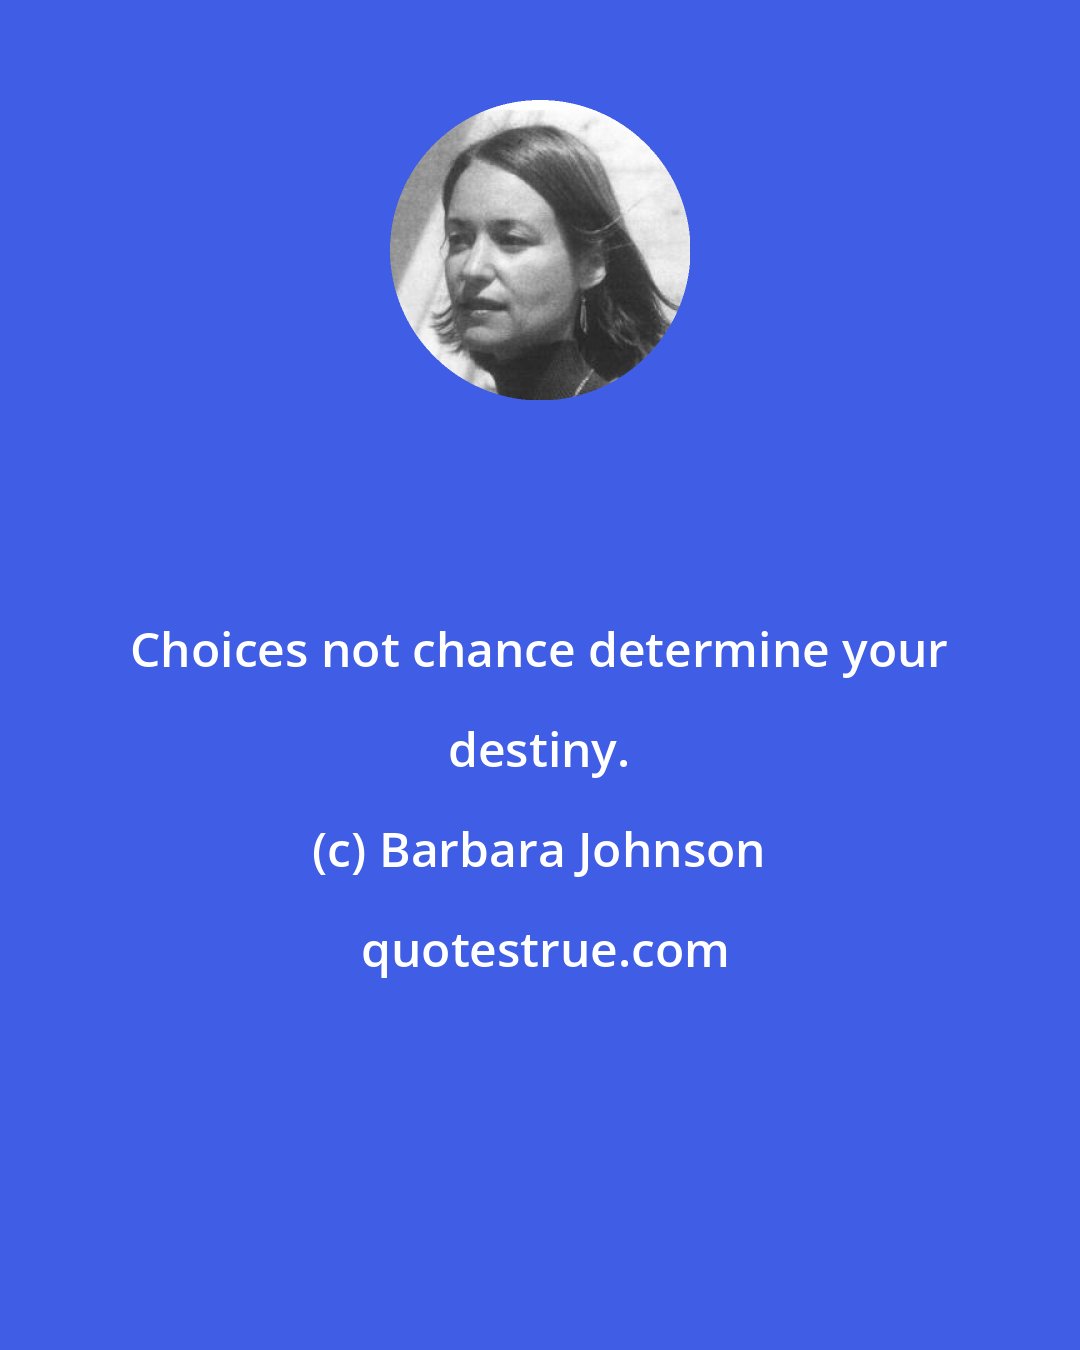 Barbara Johnson: Choices not chance determine your destiny.